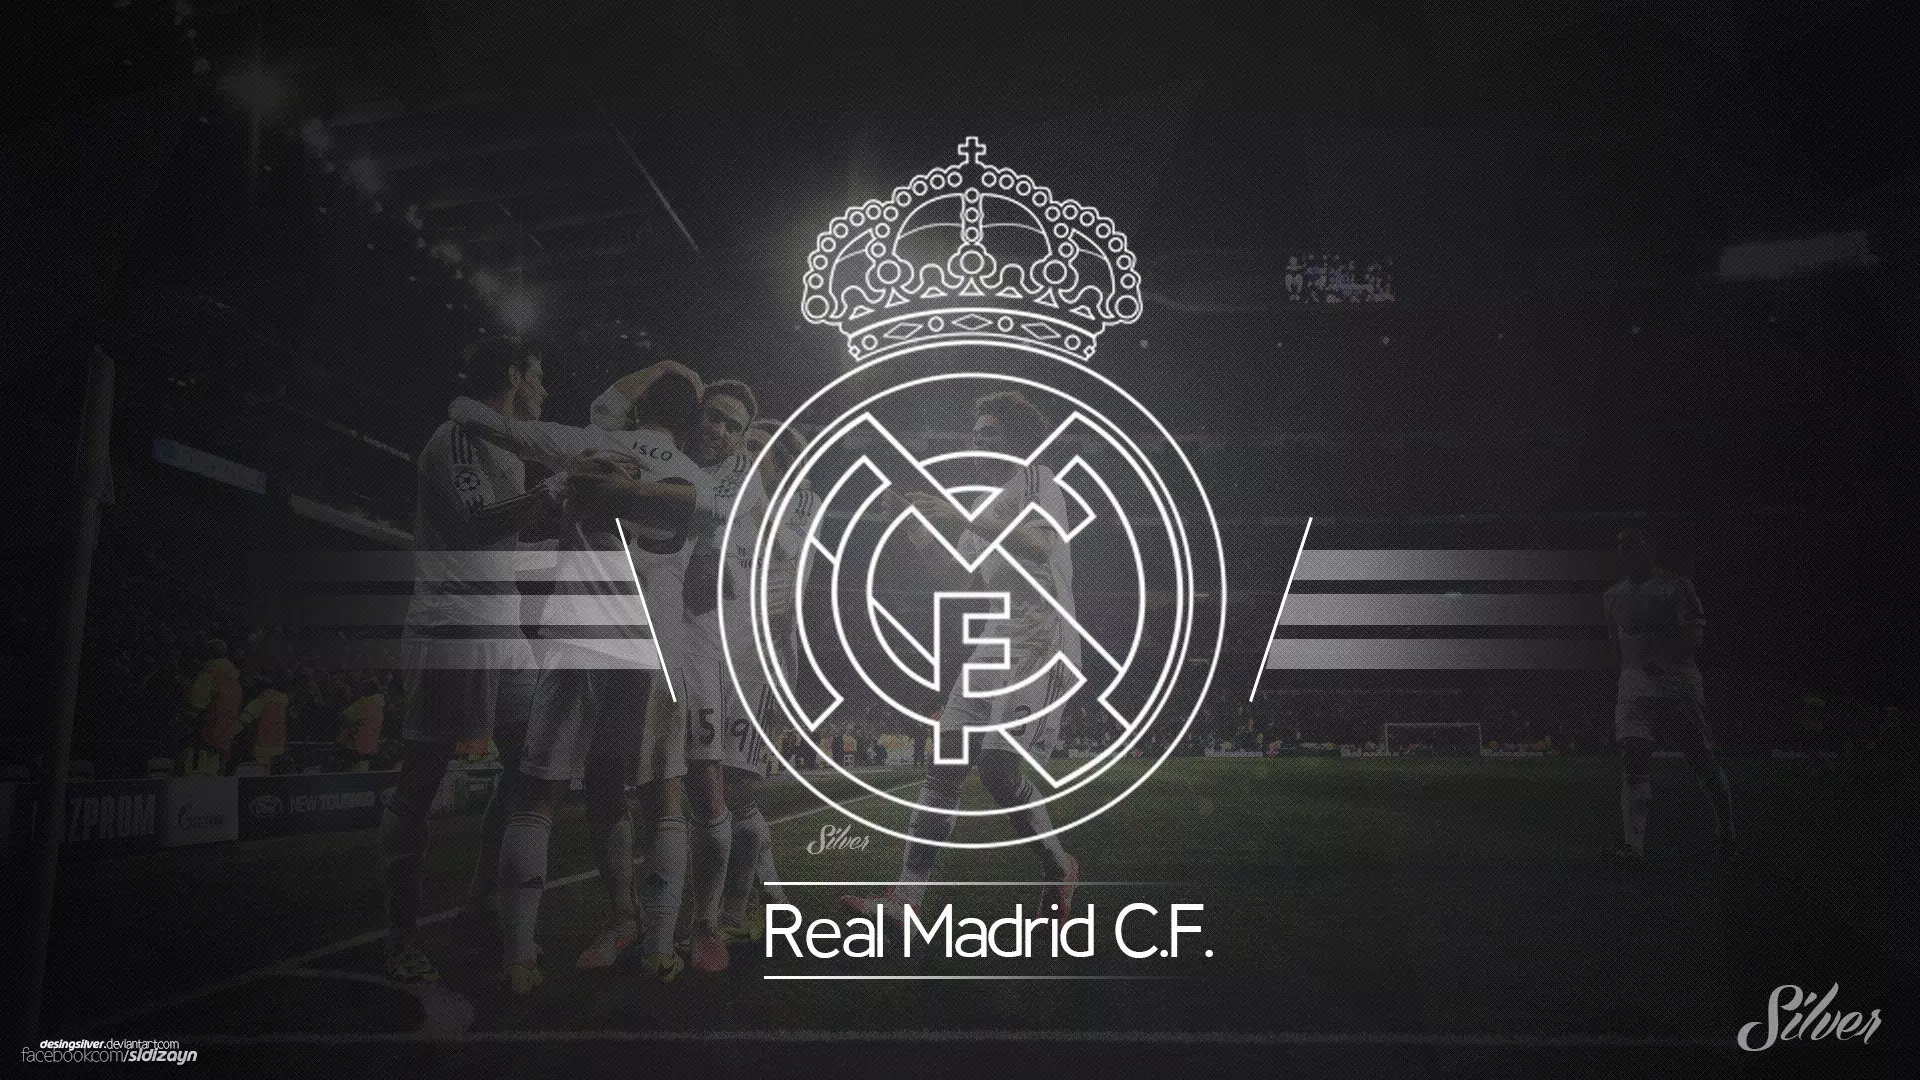 Real Madrid Hintergrundbild 1920x1080. Real Madrid Wallpaper APK für Android herunterladen